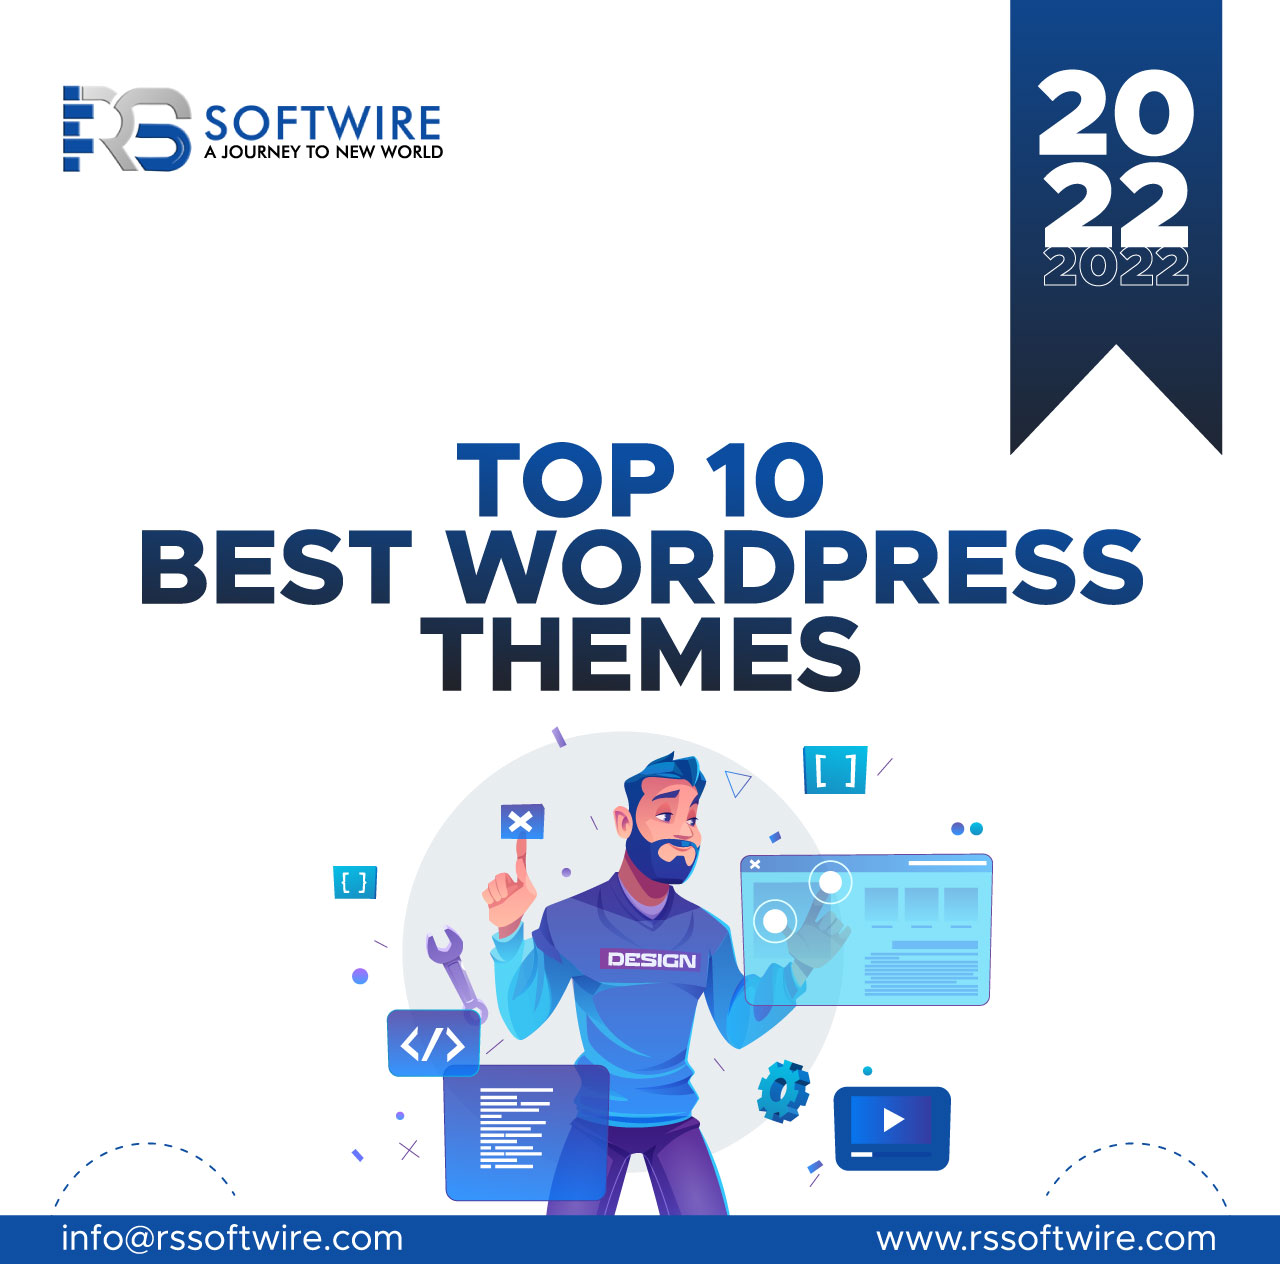 Top 10 Best WordPress themes